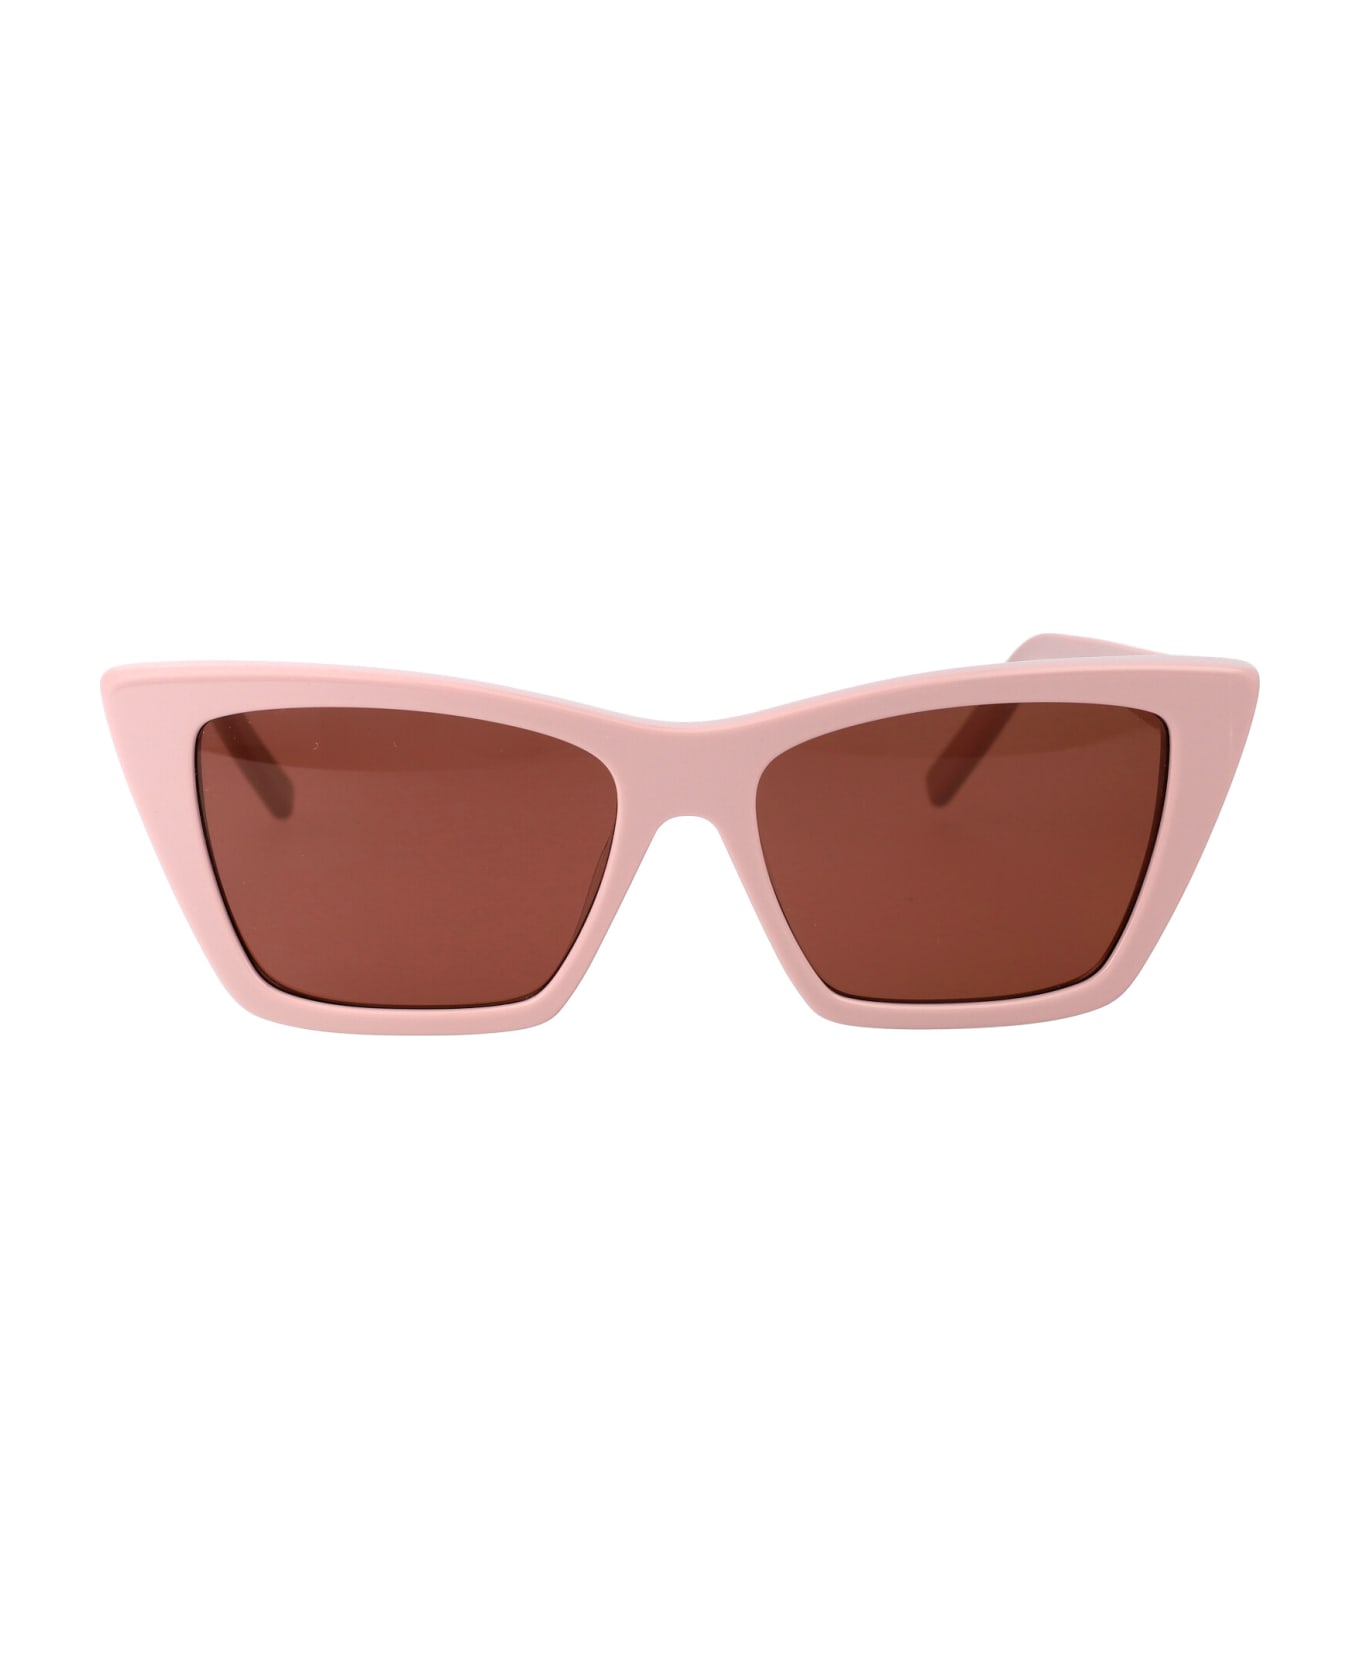 Saint Laurent Eyewear Sl 276 Mica Sunglasses - 058 PINK PINK BROWN